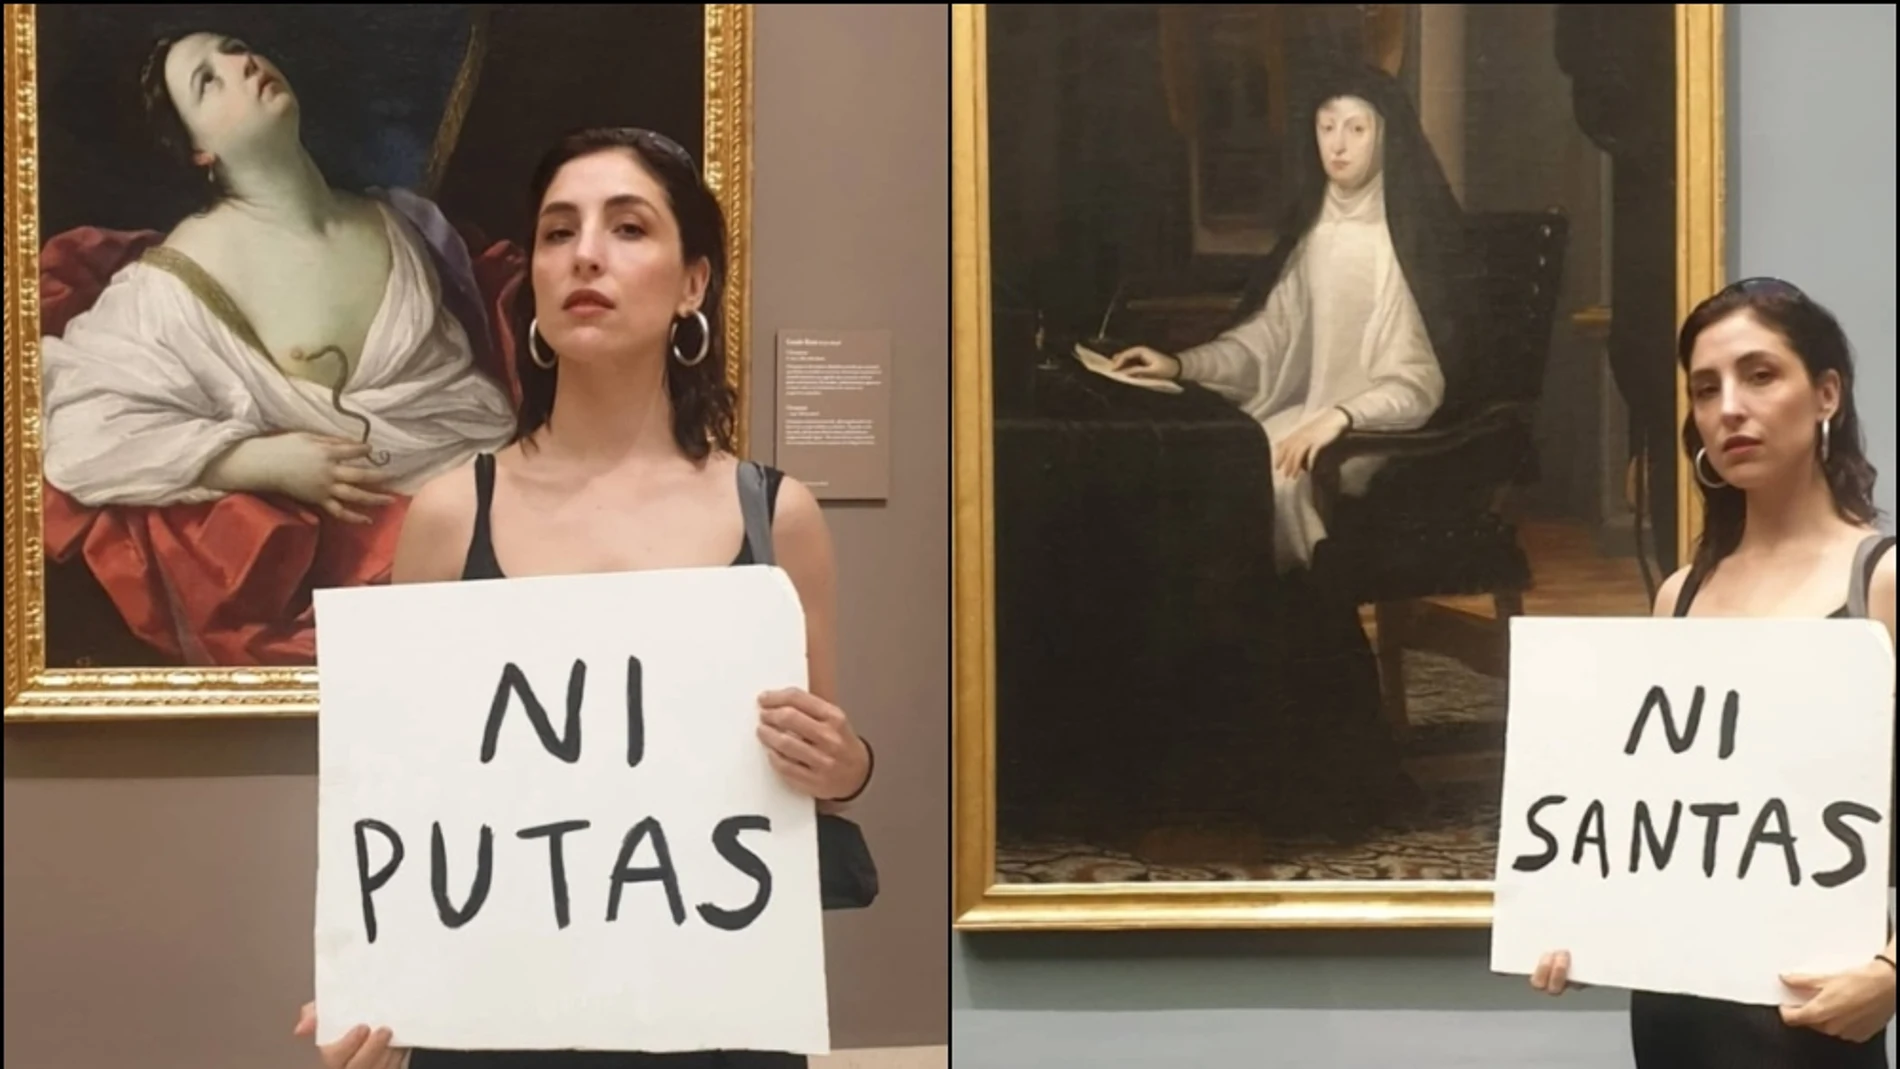 La tuitera @mespagueti posa reivindicativa frente a dos pinturas del Museo del Prado